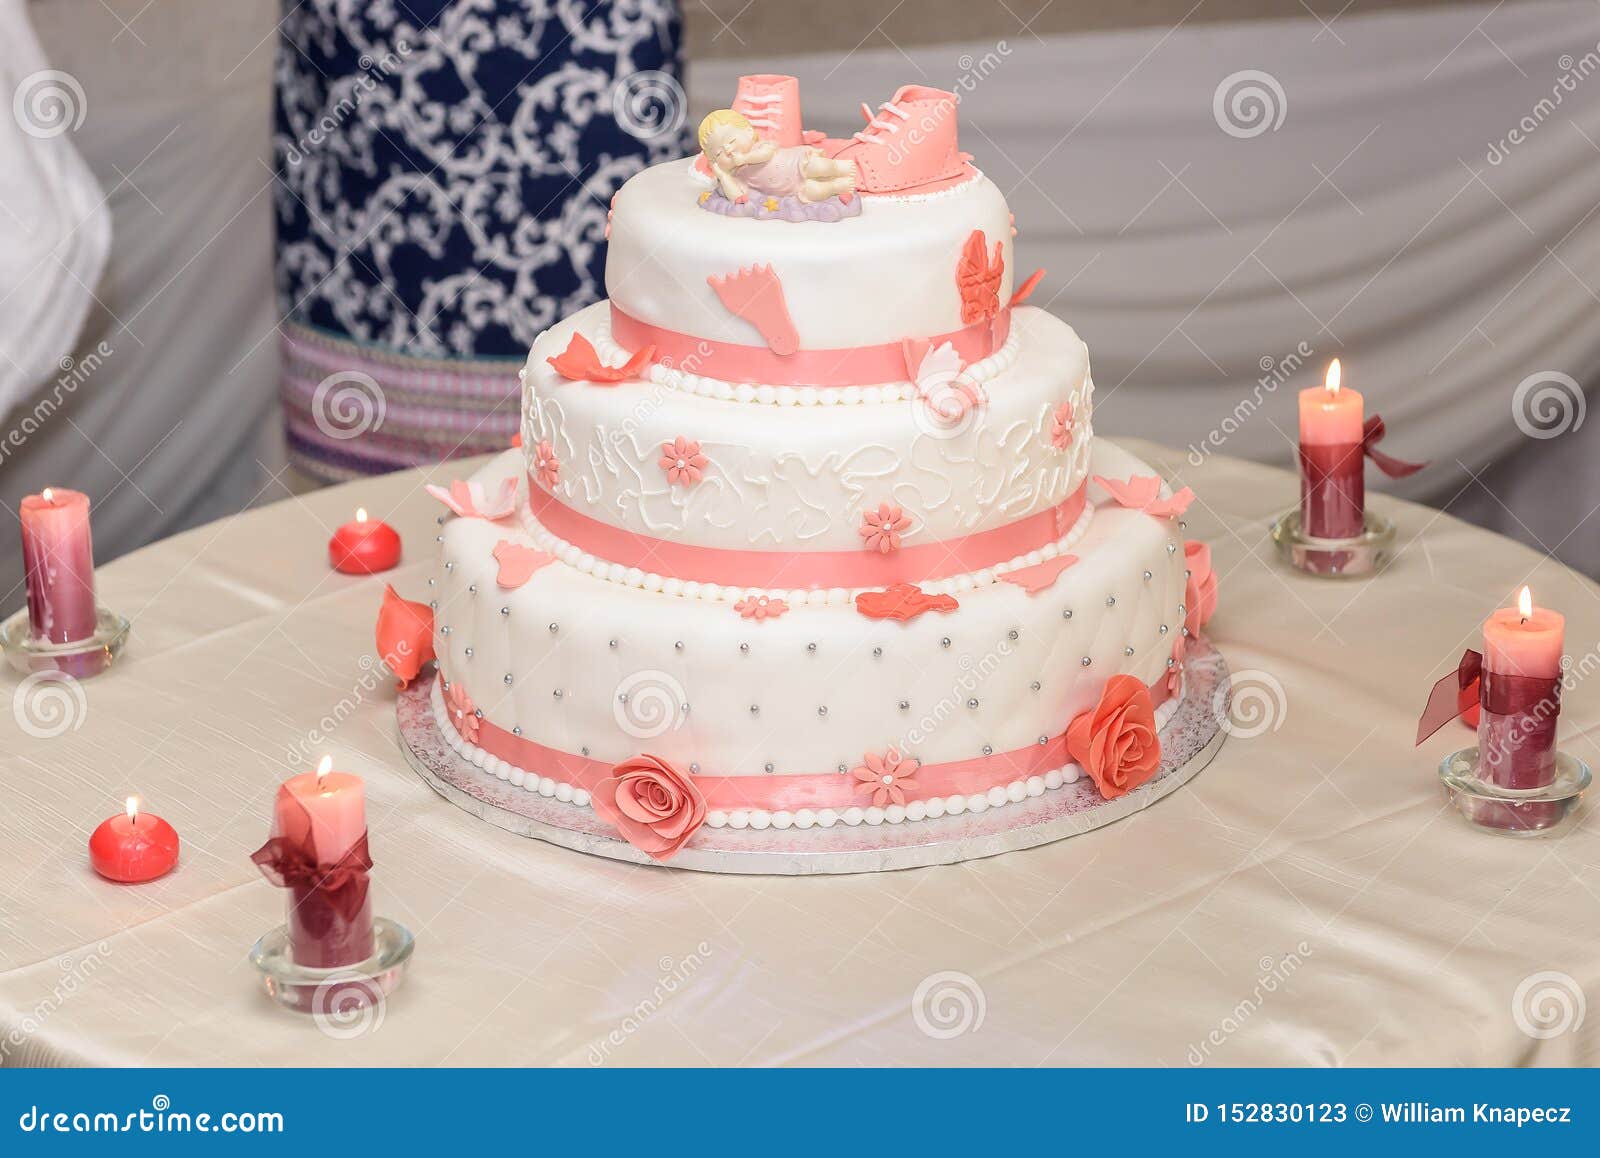 baptize cake with sugar shoes and burning candles